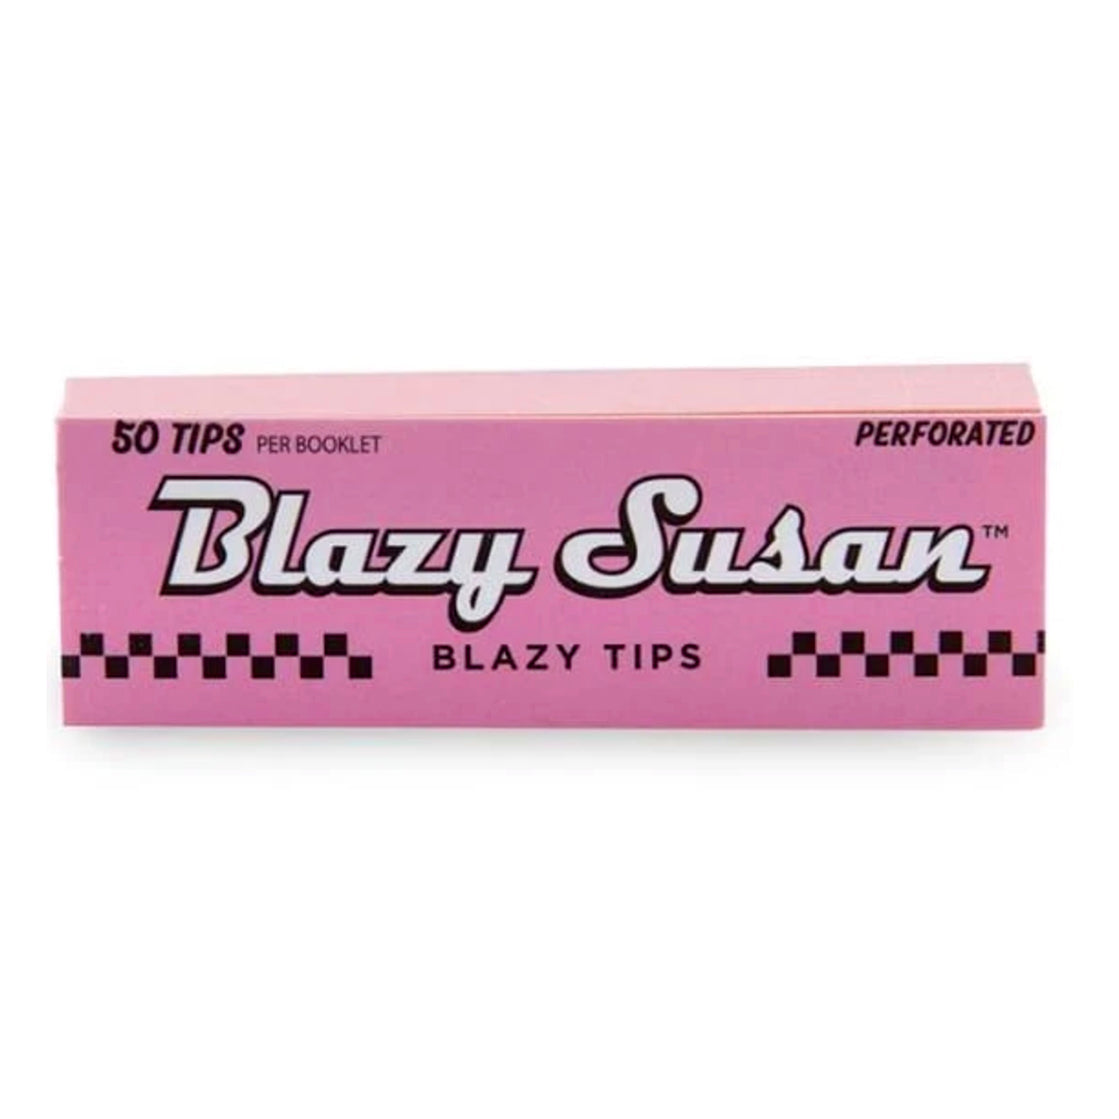 Blazy Susan Filter Tips